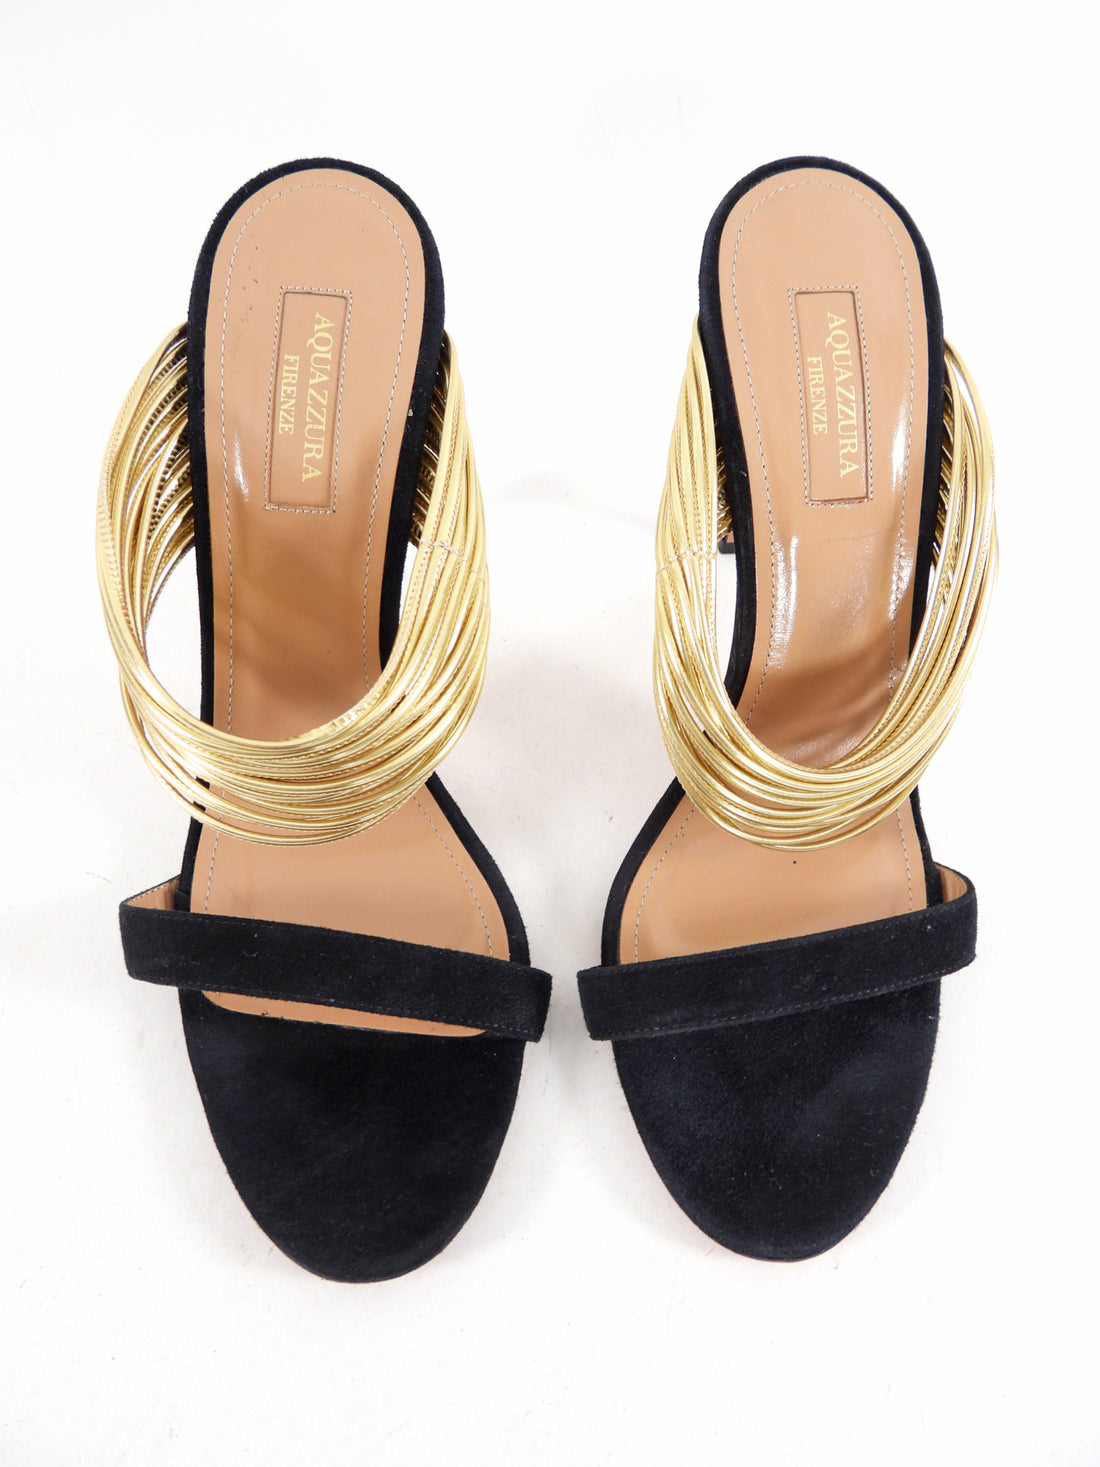 Aquazzura Black Suede and Gold Metallic Sandals - 40 / 9.5